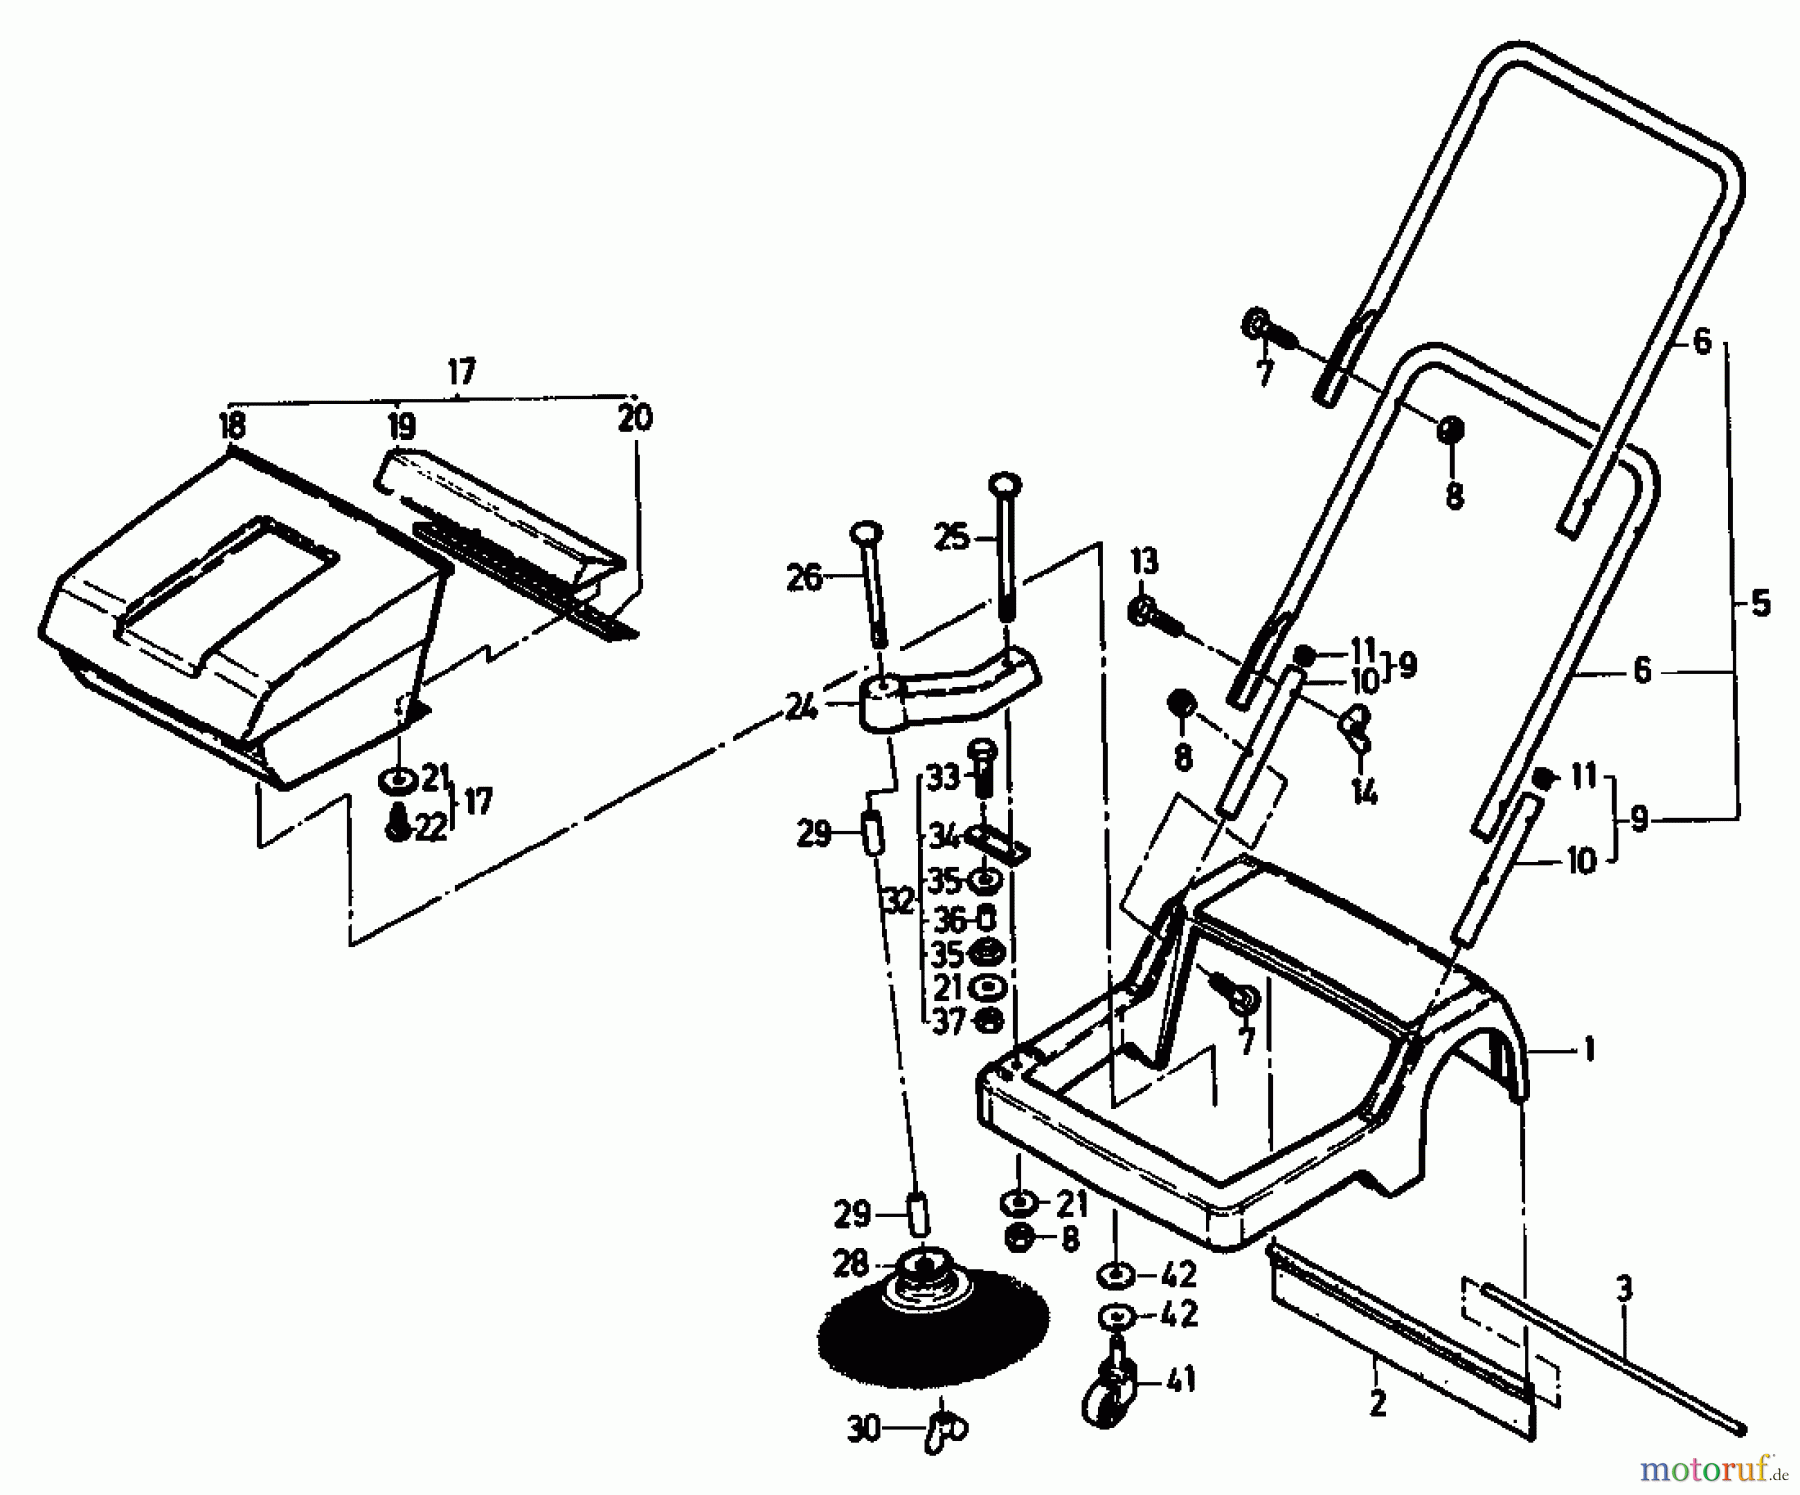  Gutbrod Push sweepers B 55 02067.04  (1992) Basic machine